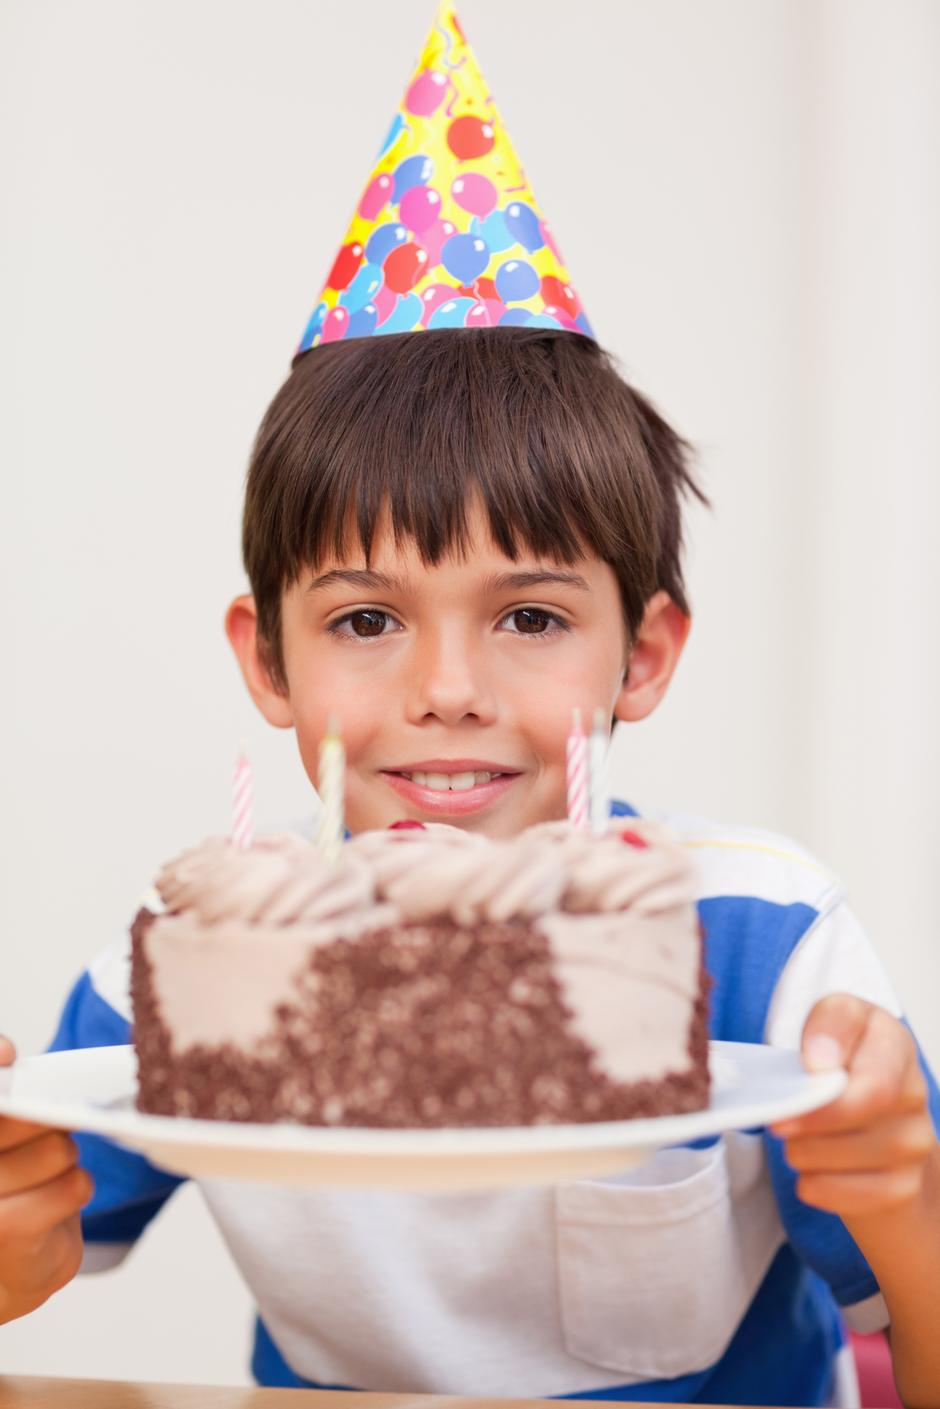 dječji rođendan zabava torta  | Author: Thinkstock